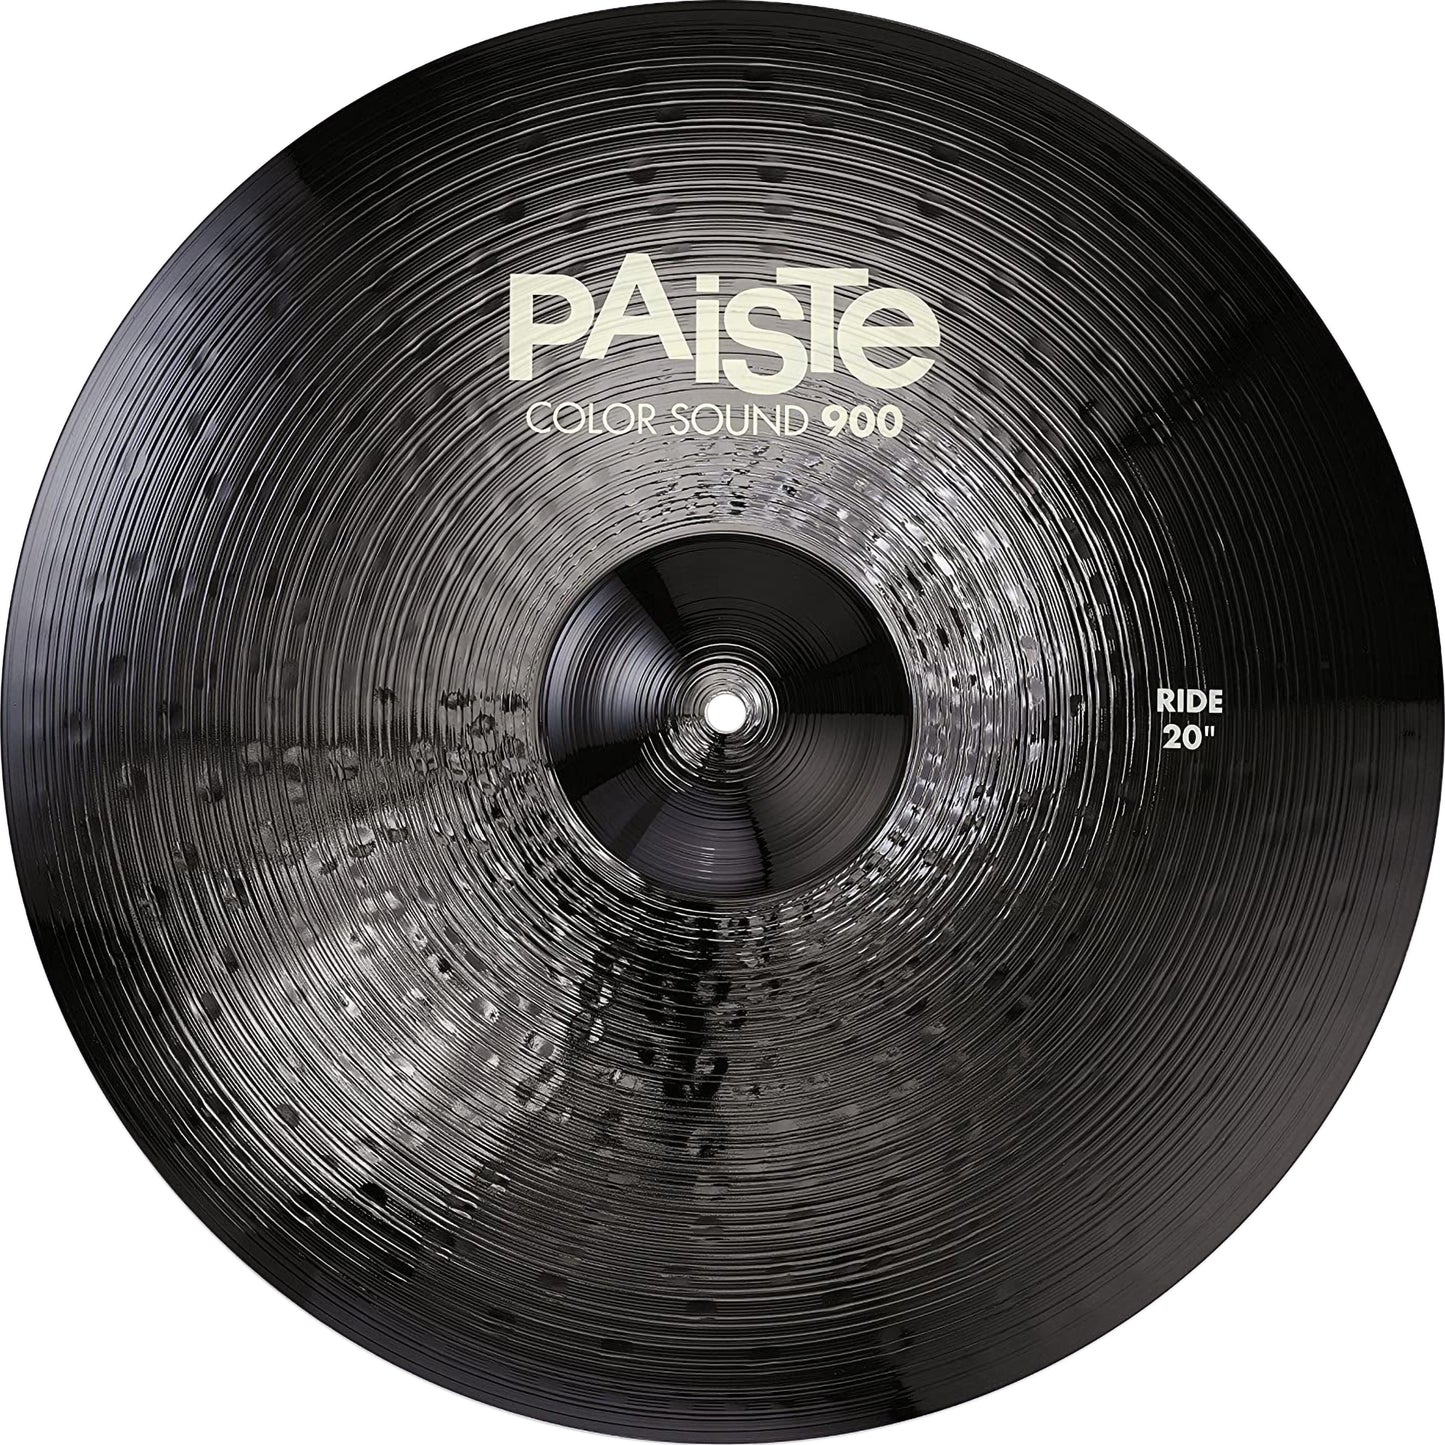 Paiste 20” Color Sound 900 Black Ride Cymbal